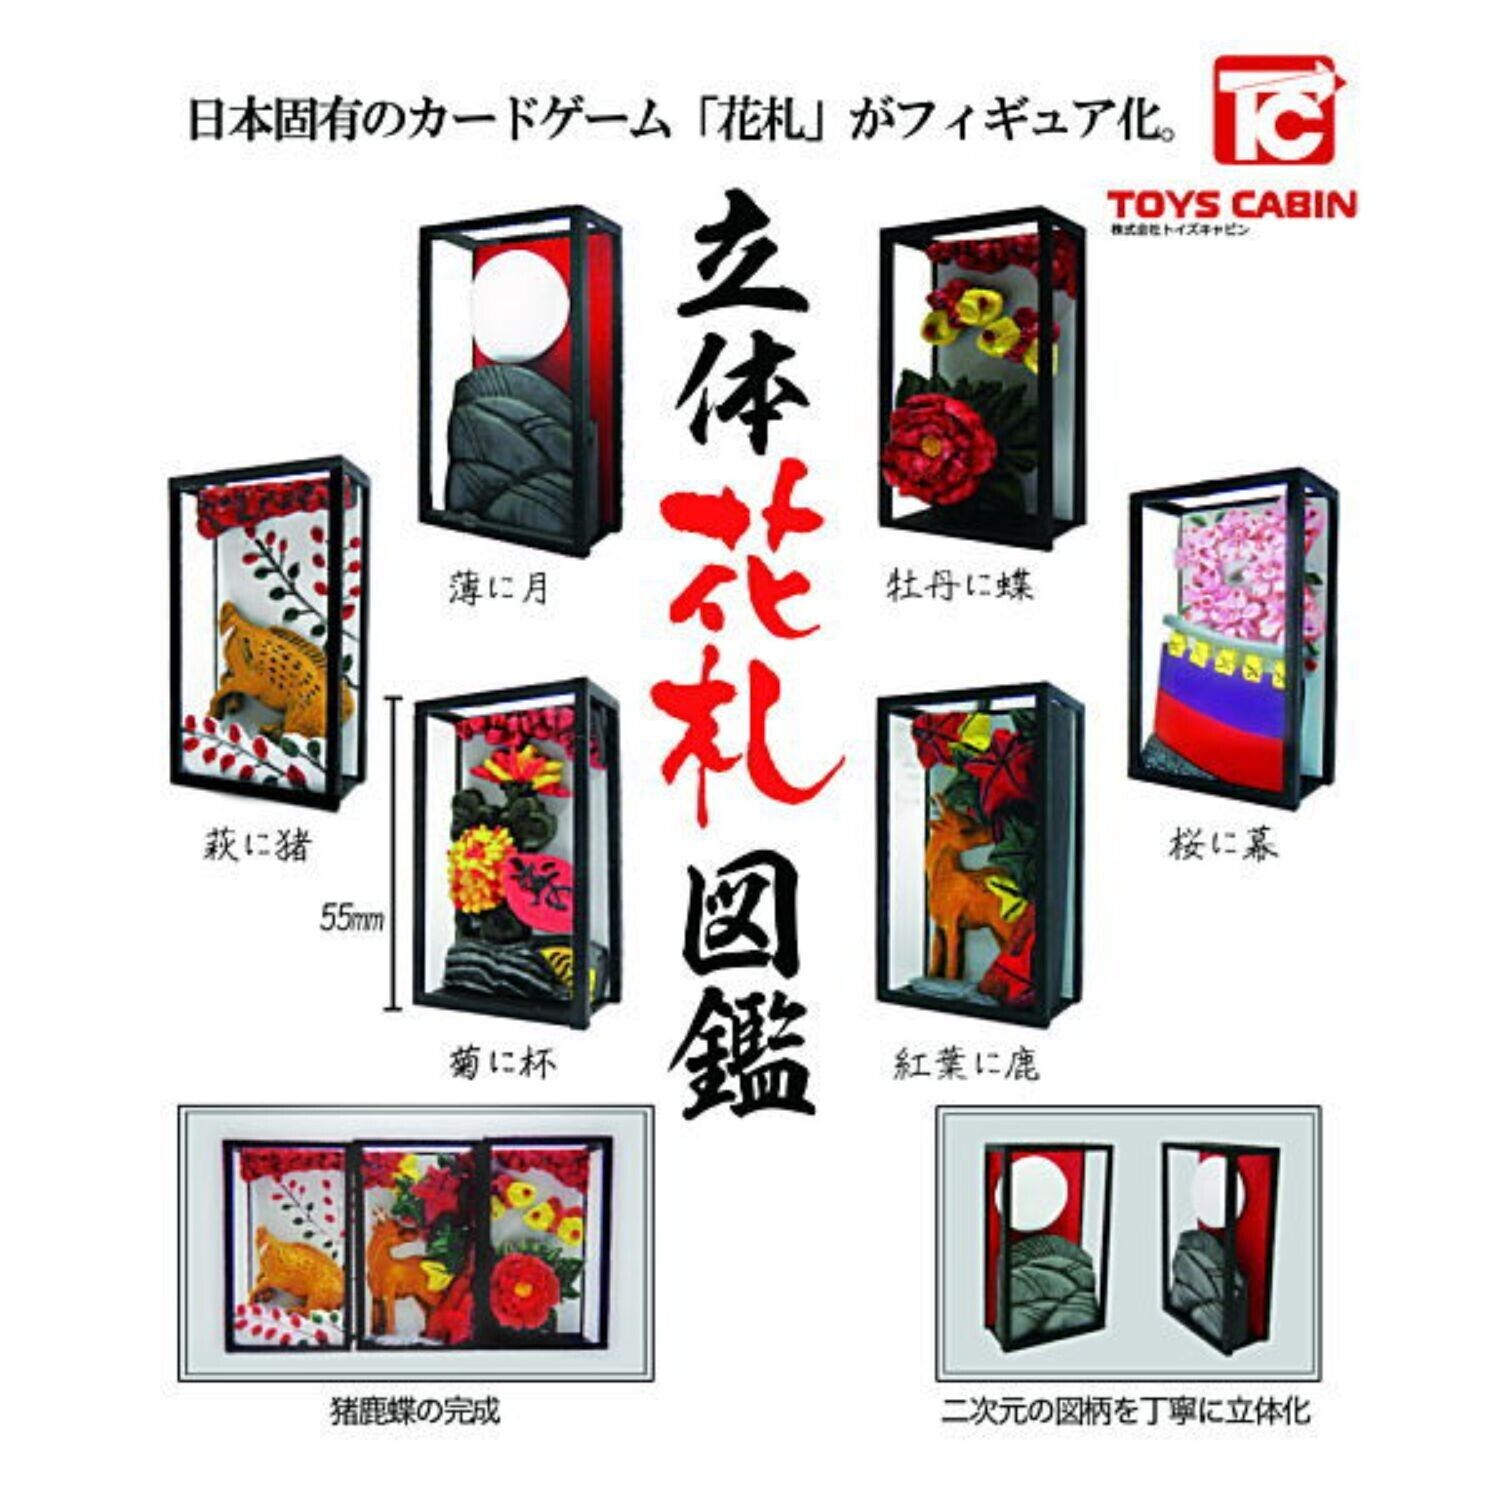 3-D Hanafuda card game picture Mascot Capsule Toy 6 Types Full Comp Set Gacha